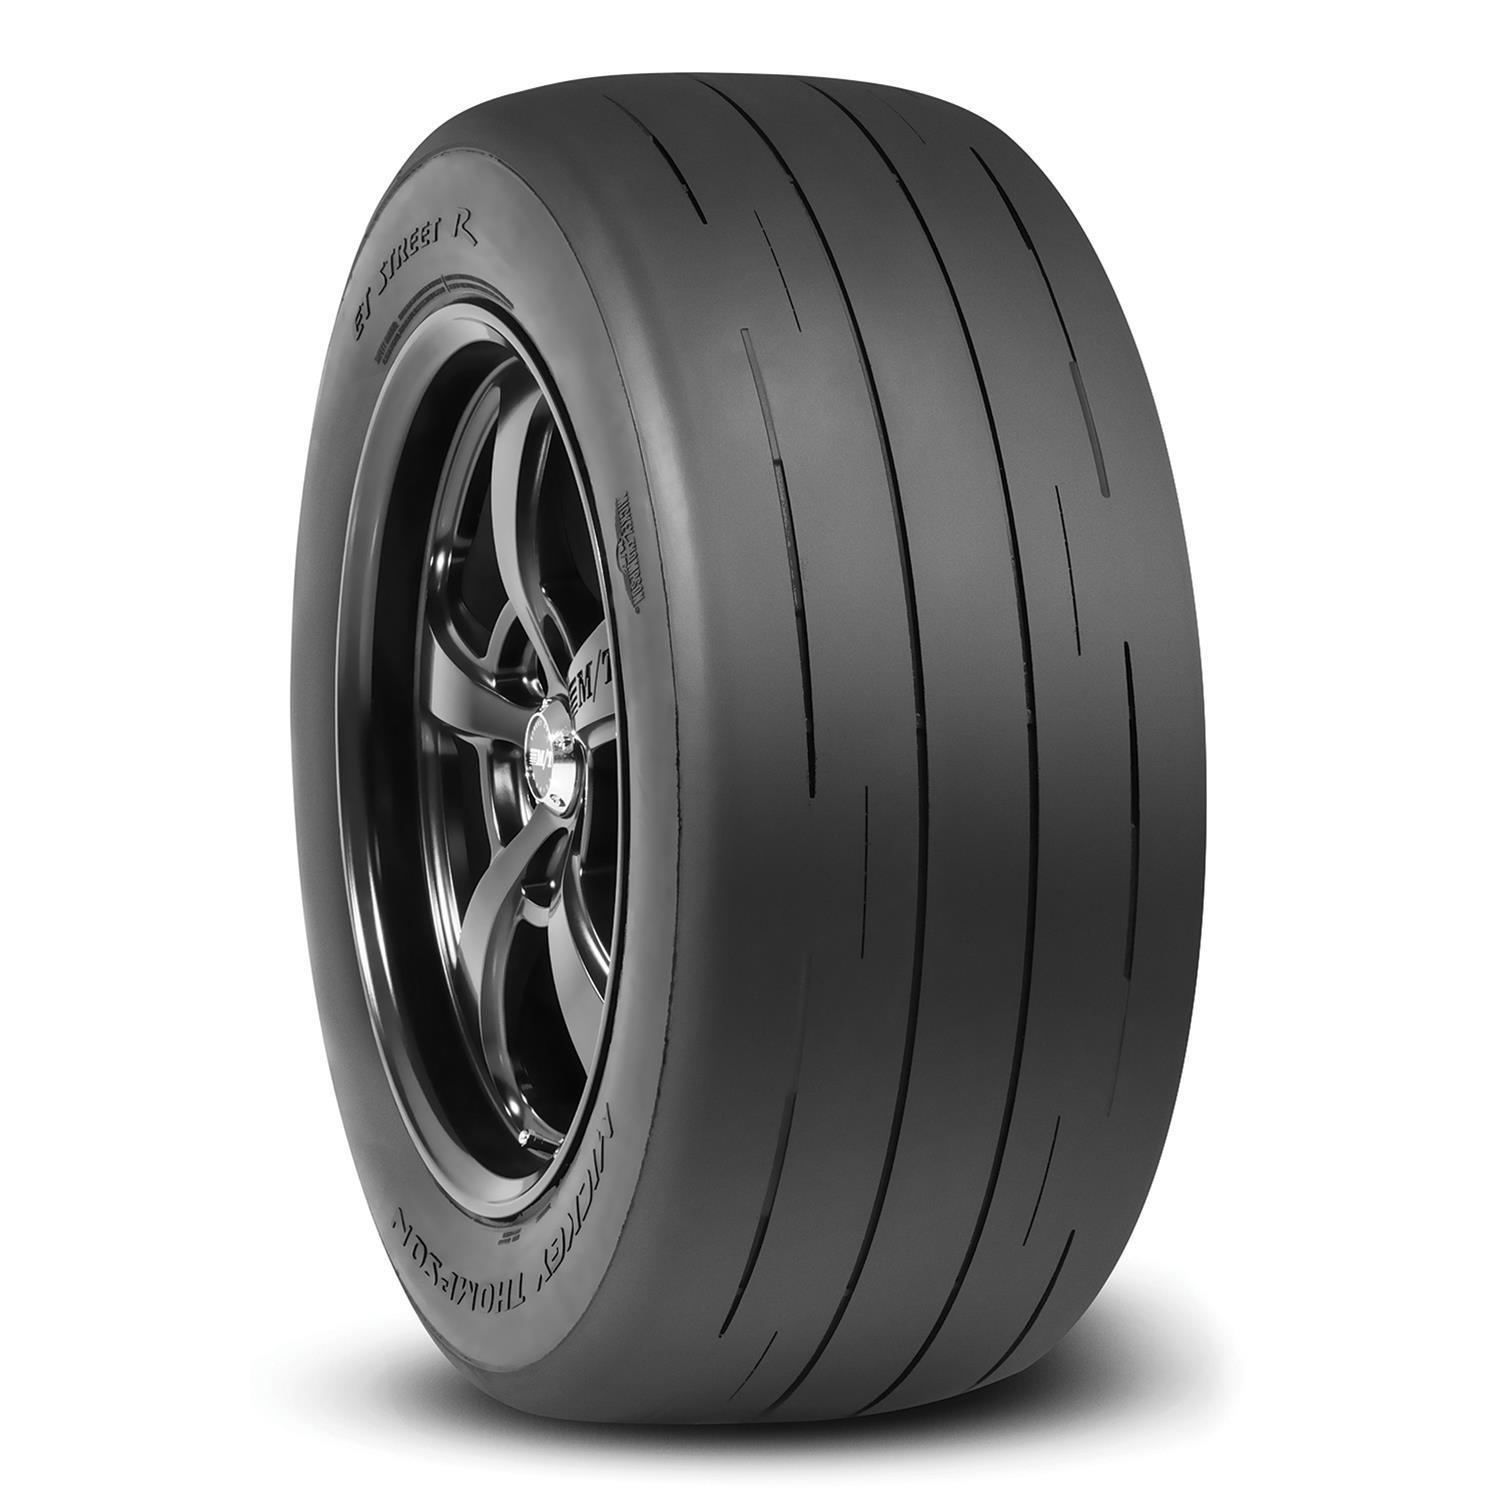 P305/45R18 ET Street R Tire - Burlile Performance Products